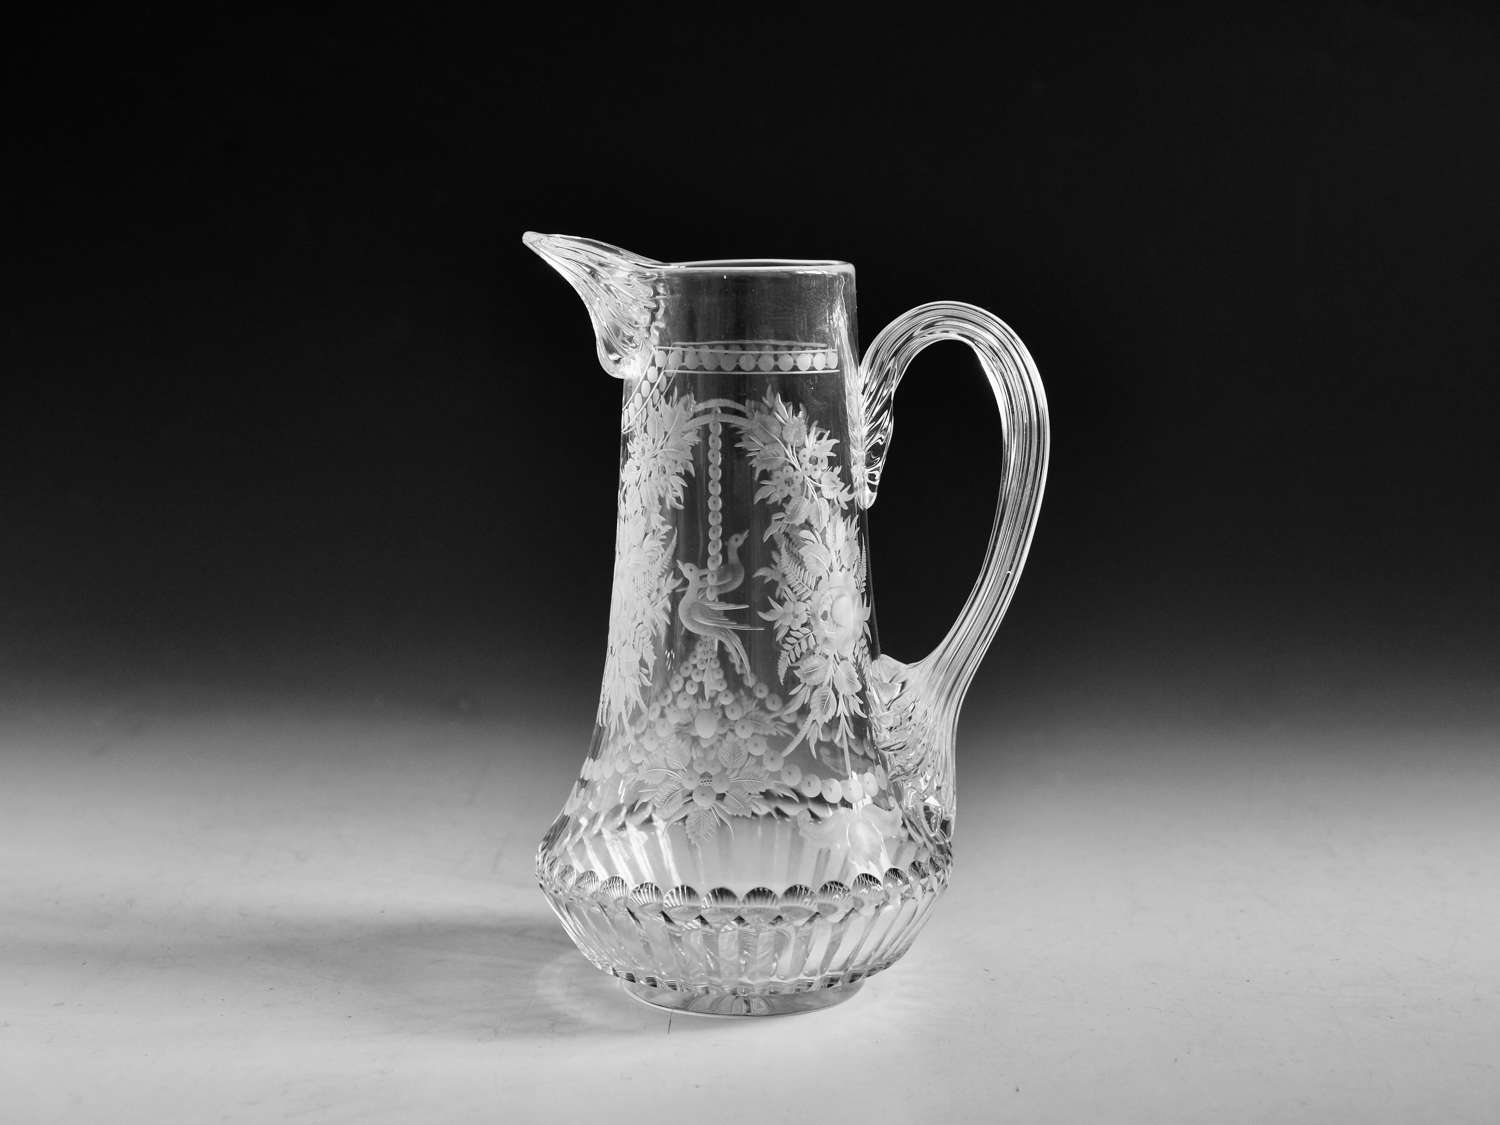 Antique glass - engraved water jug English c1870